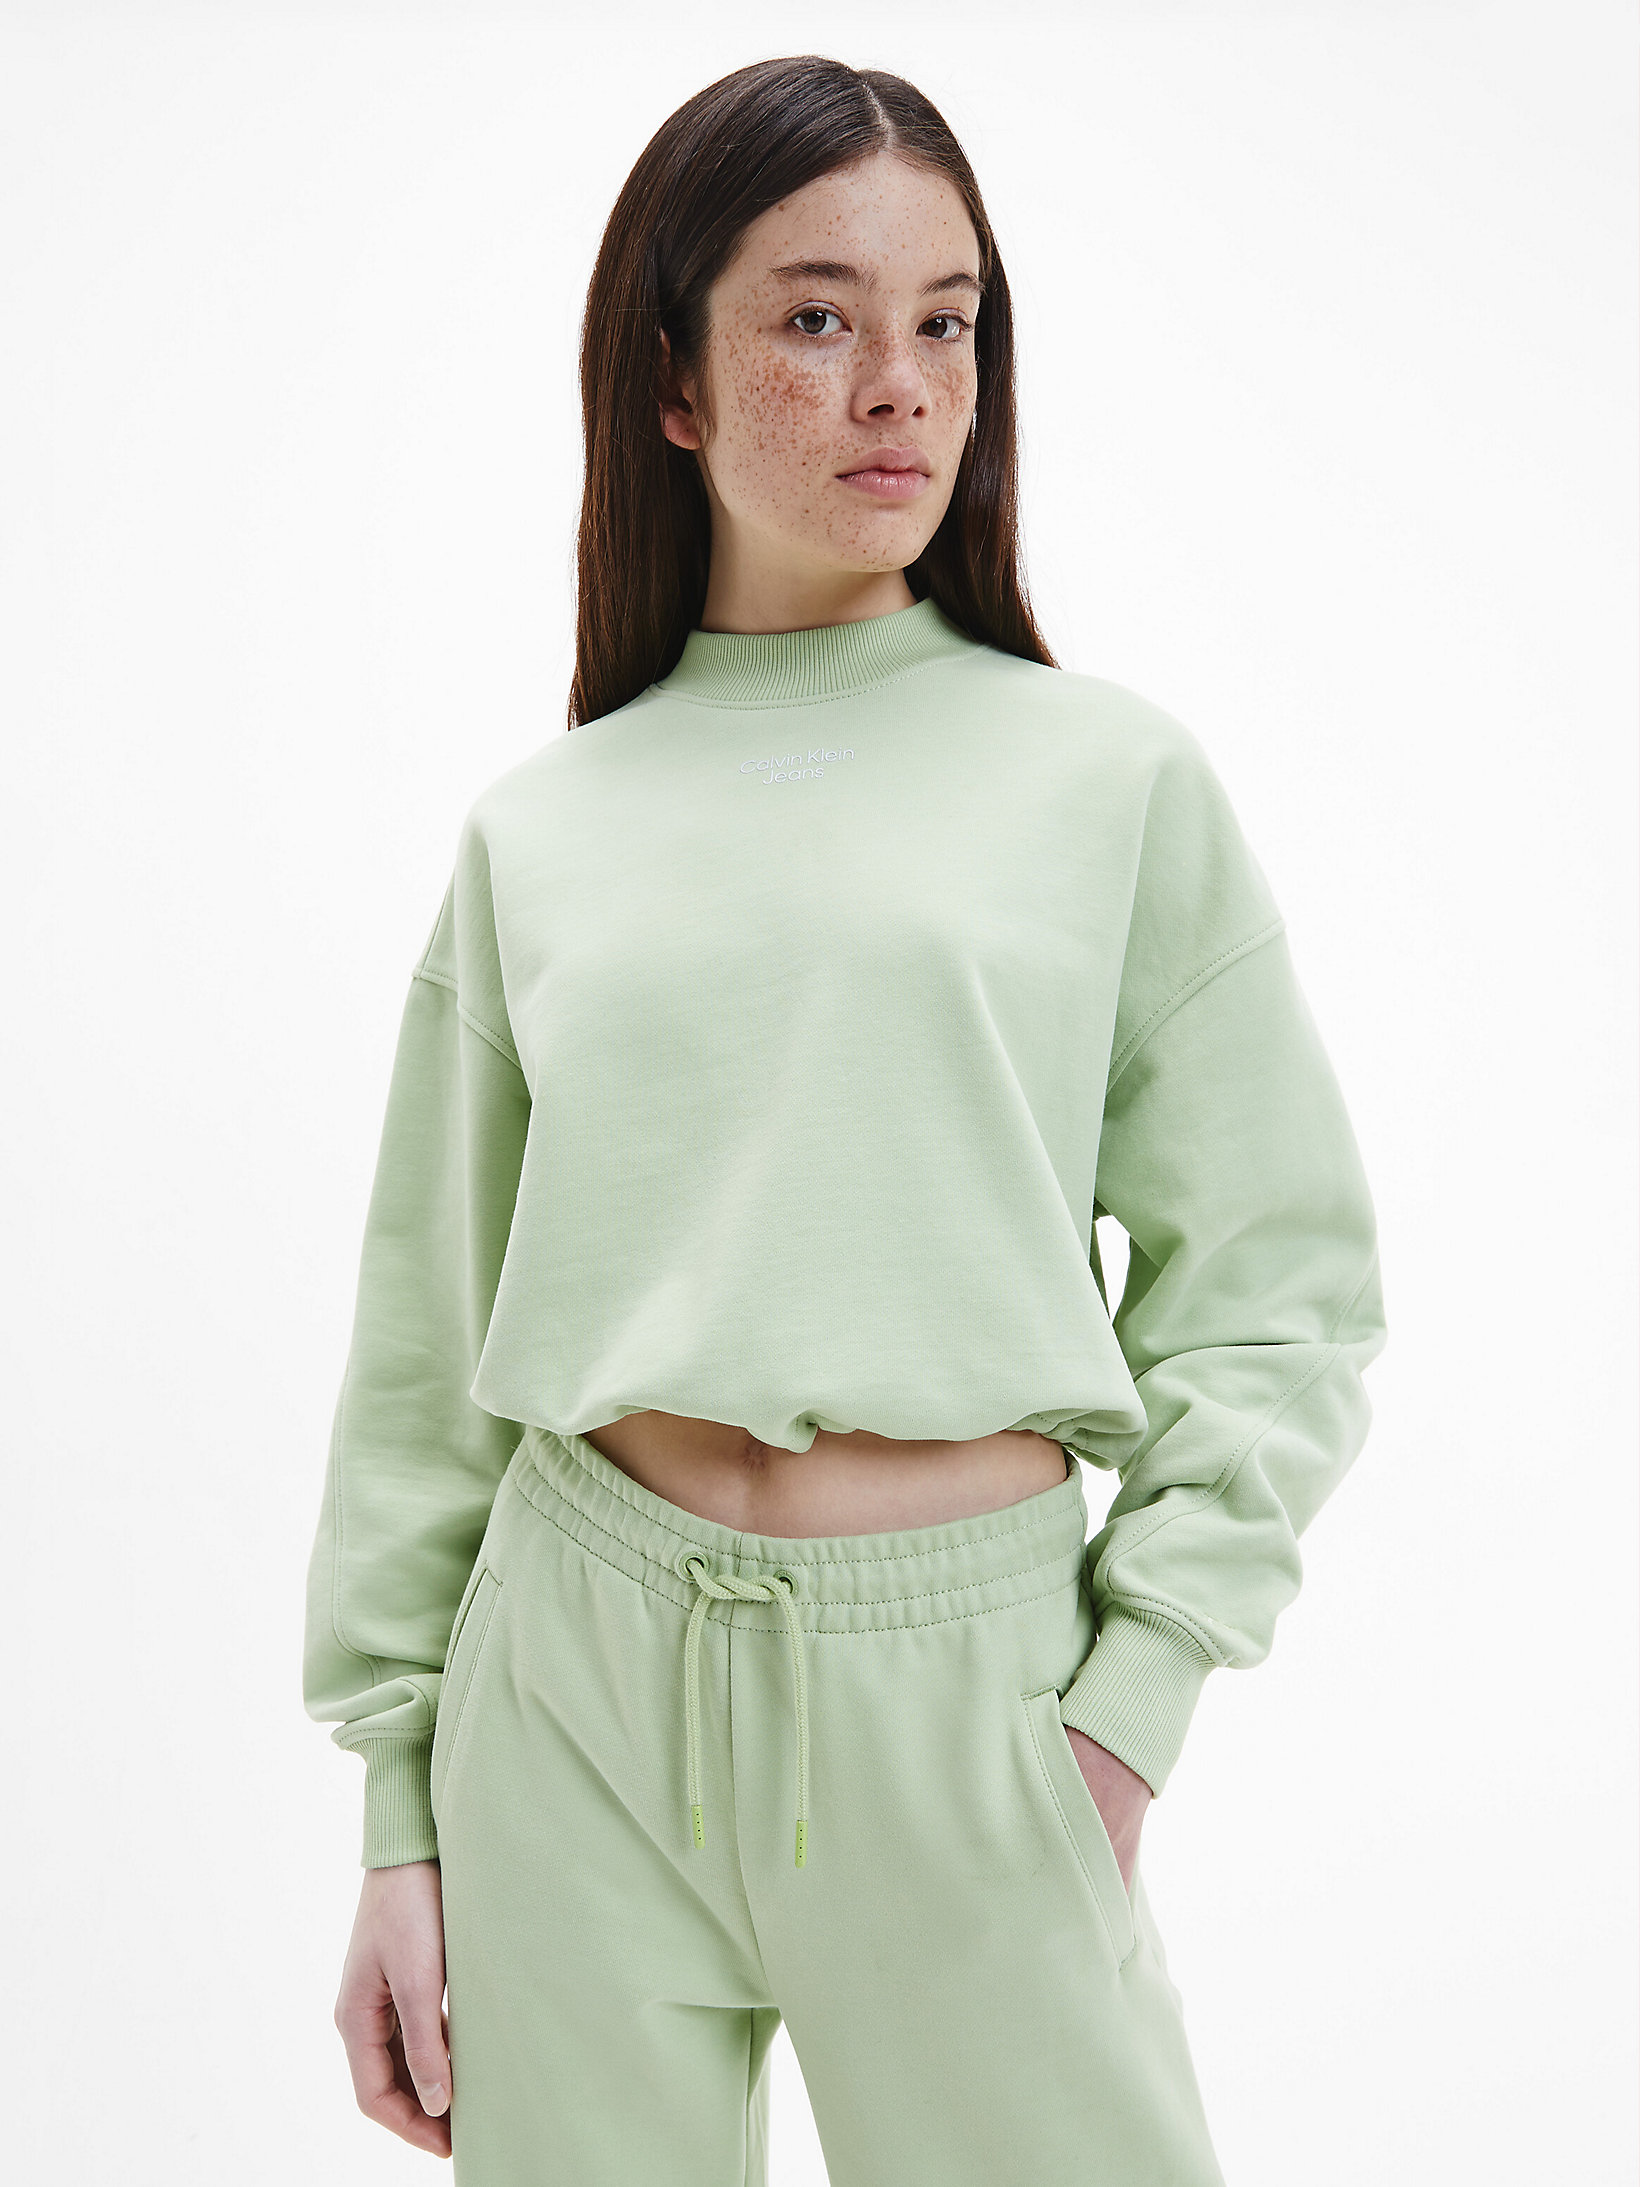 Jaded Green > Свободный свитшот на кулиске > undefined Женщины - Calvin Klein